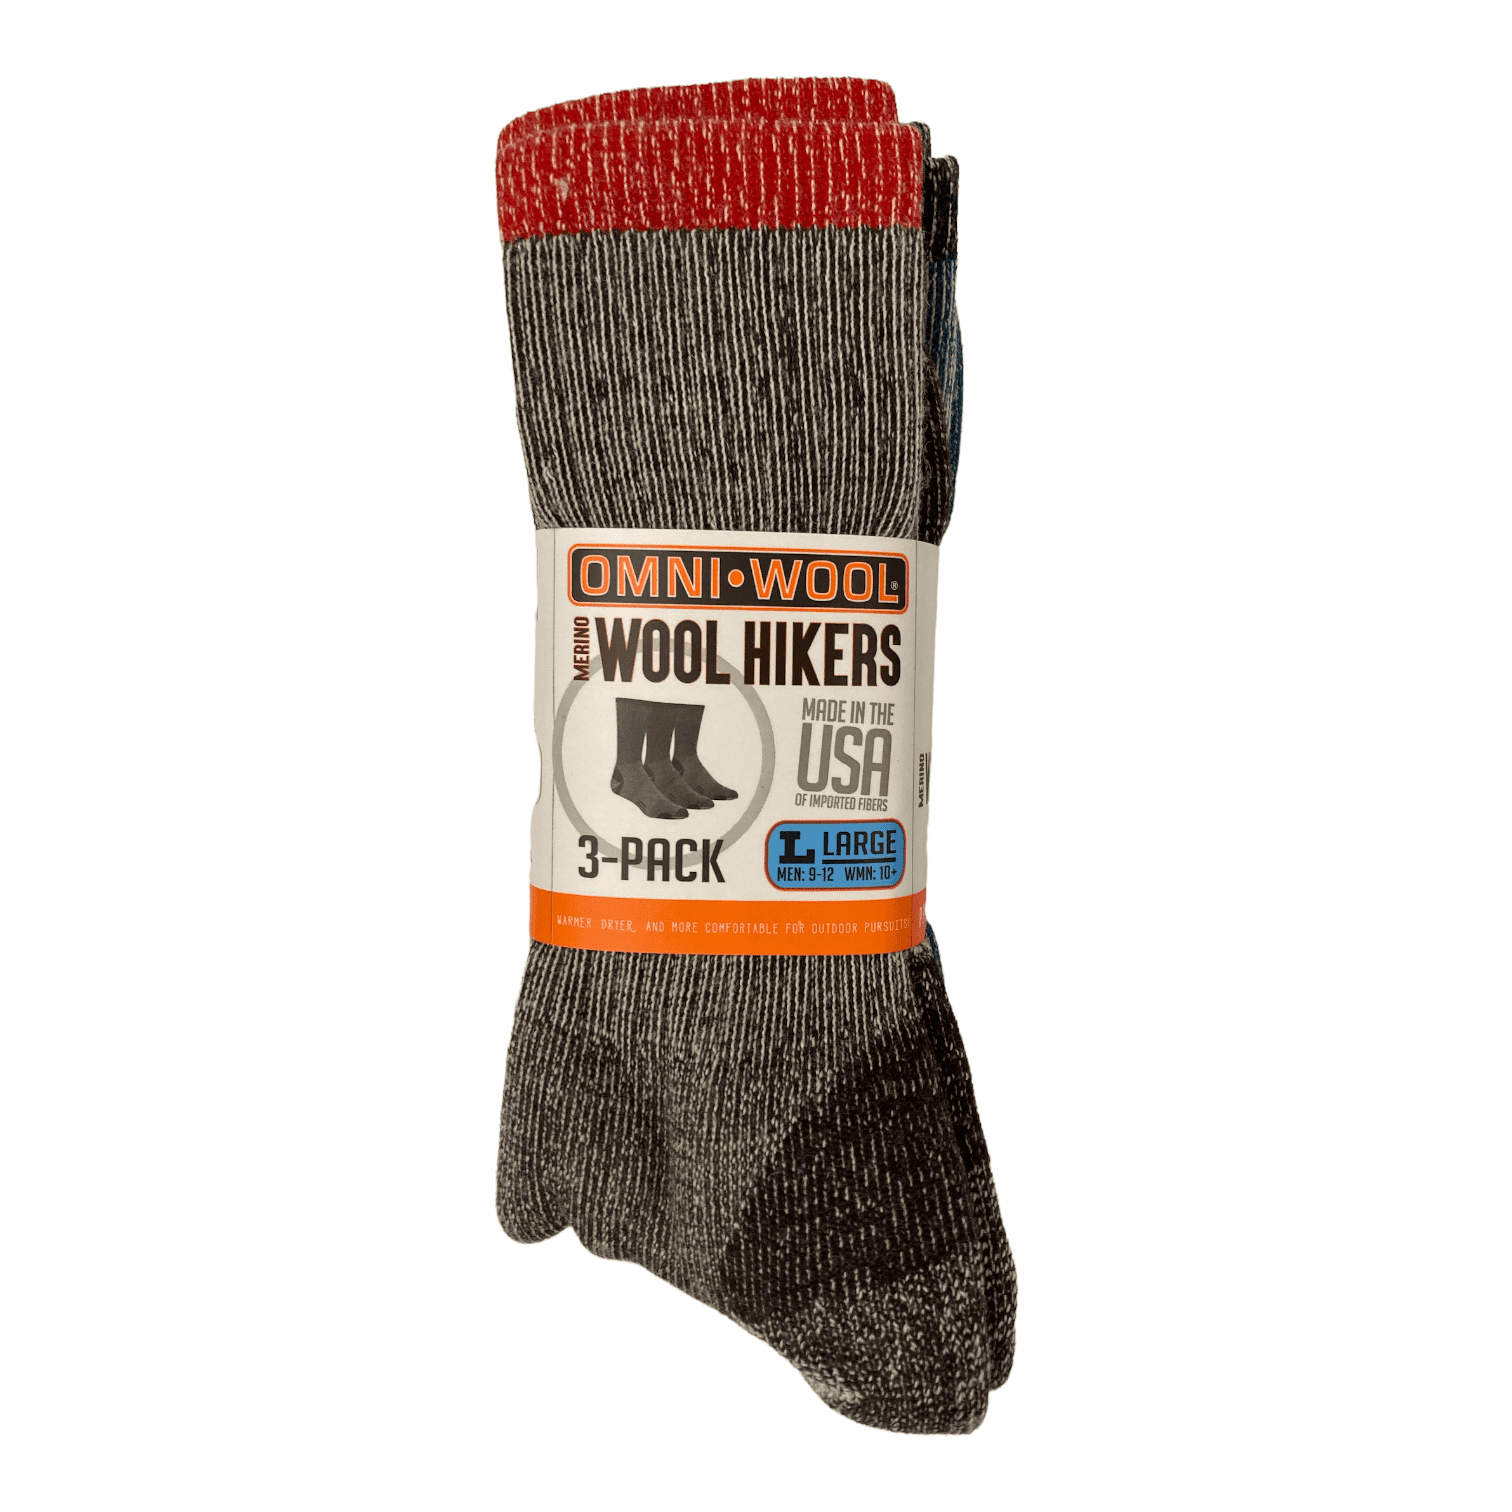 Omni Wool Unisex Merino Wool Multi-Sport Warm Hikers Hunting Socks, 3 ...